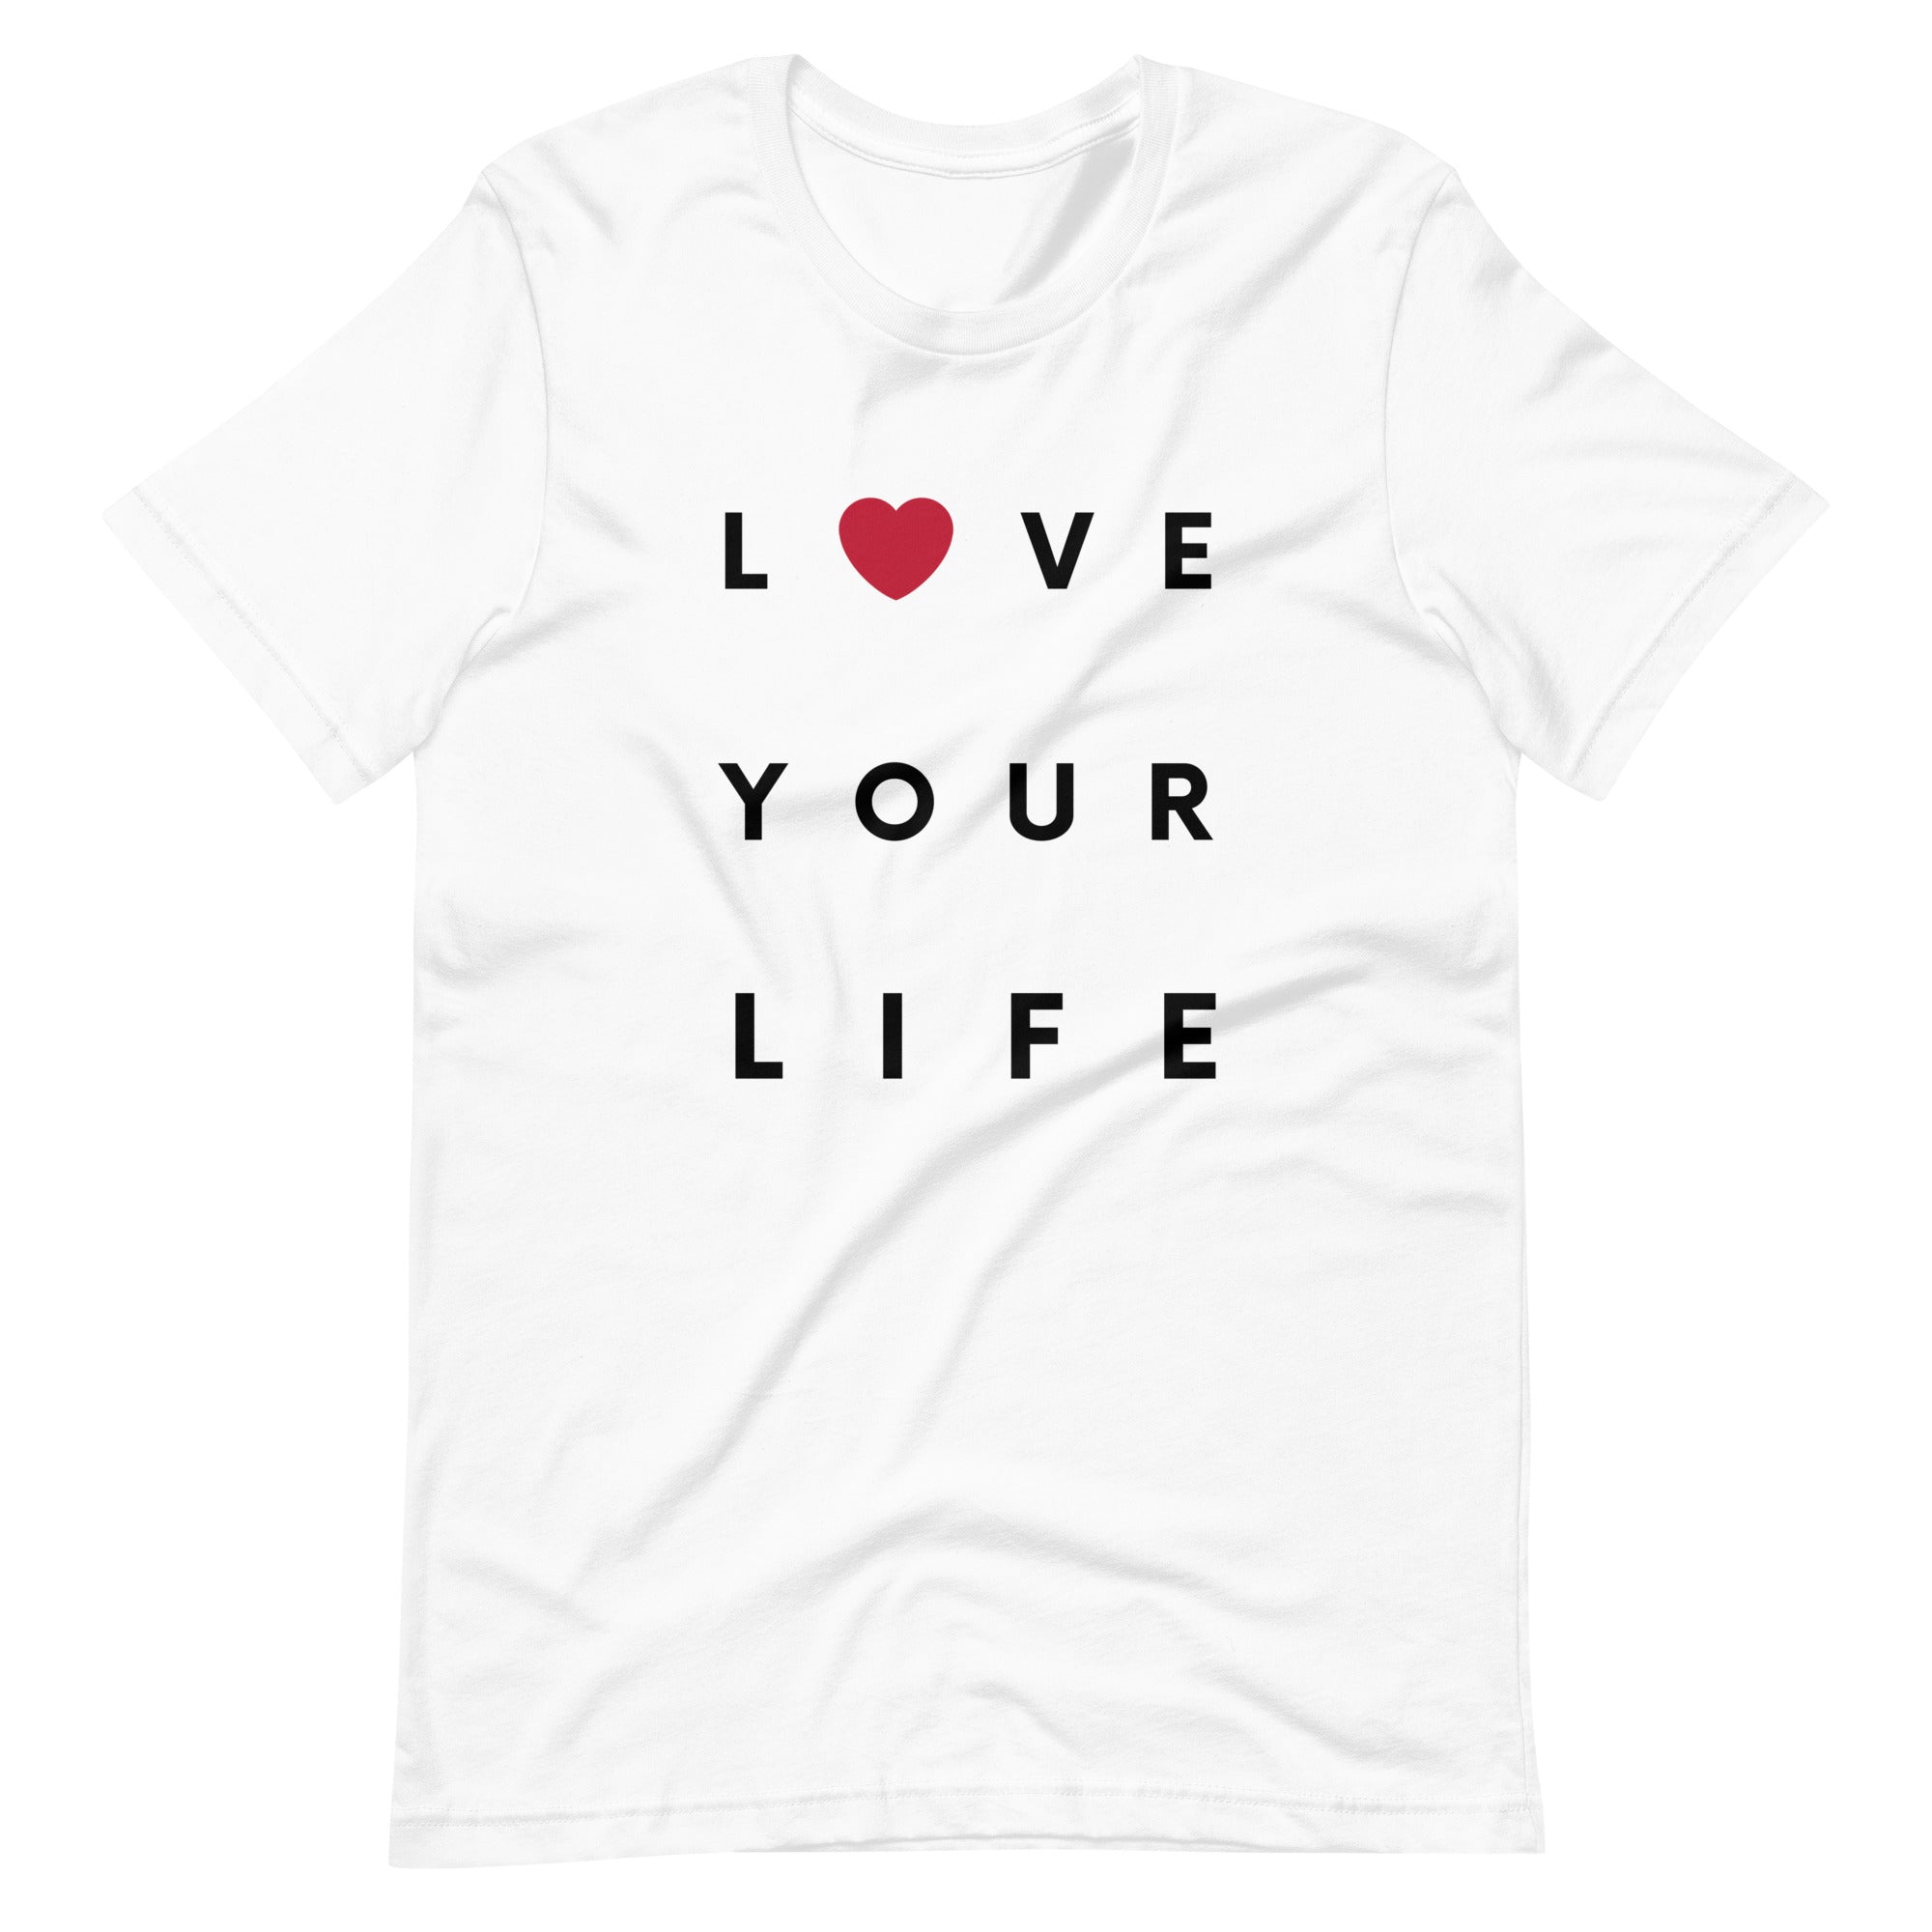 Love Your Life - Women's T-shirt